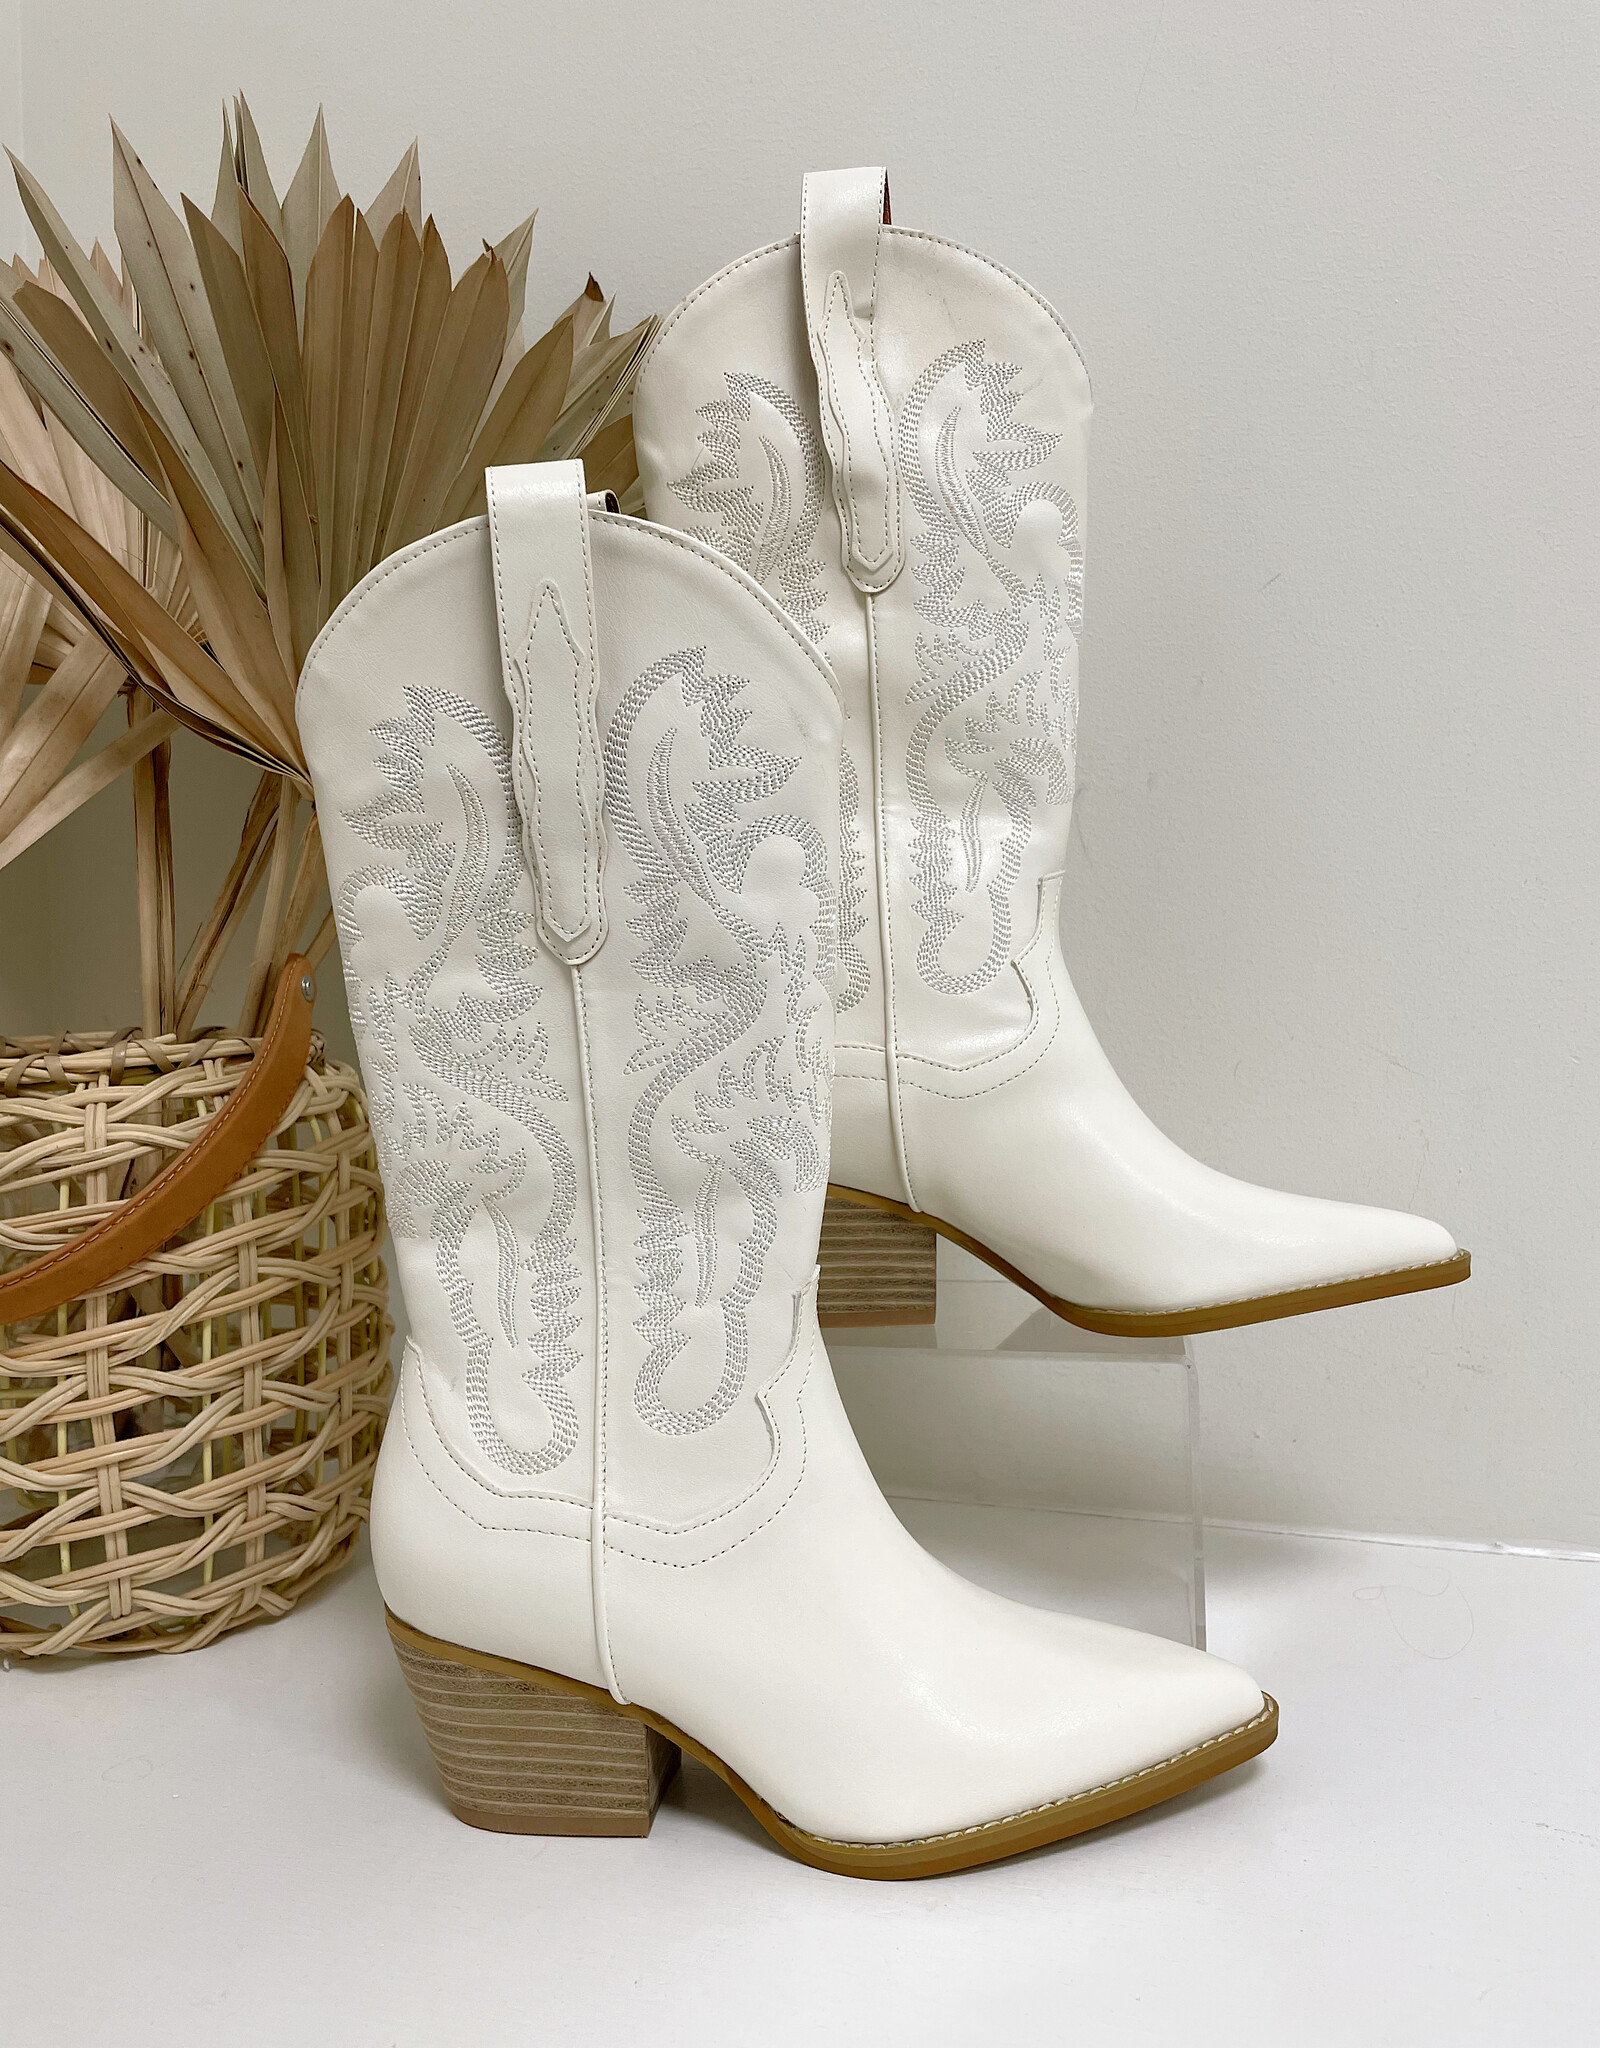 Amaya Classic Cowboy Boot